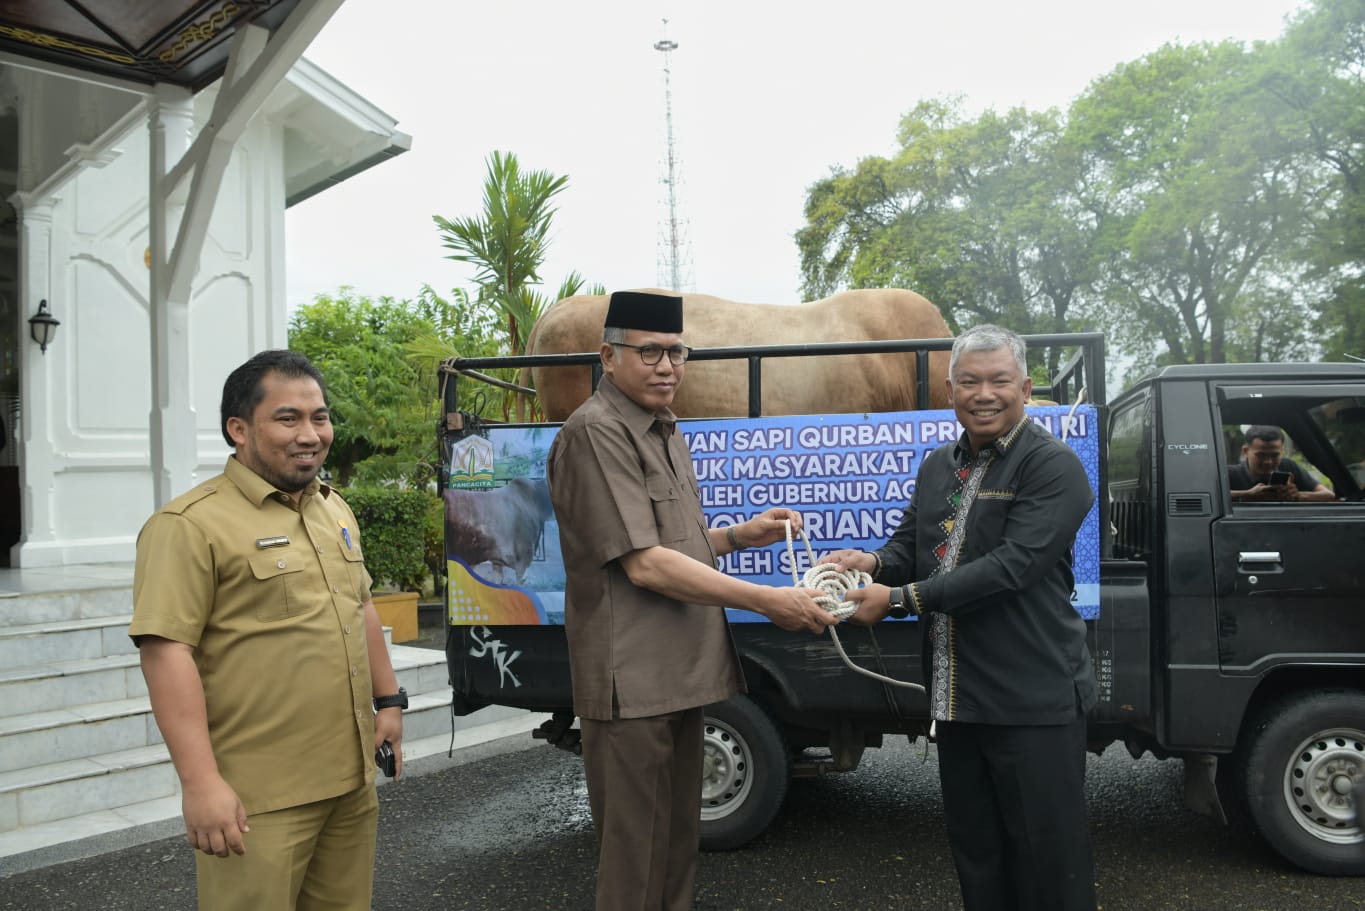 Sapi kurban bantuan Presiden RI diserahkan untuk Aceh Tengah